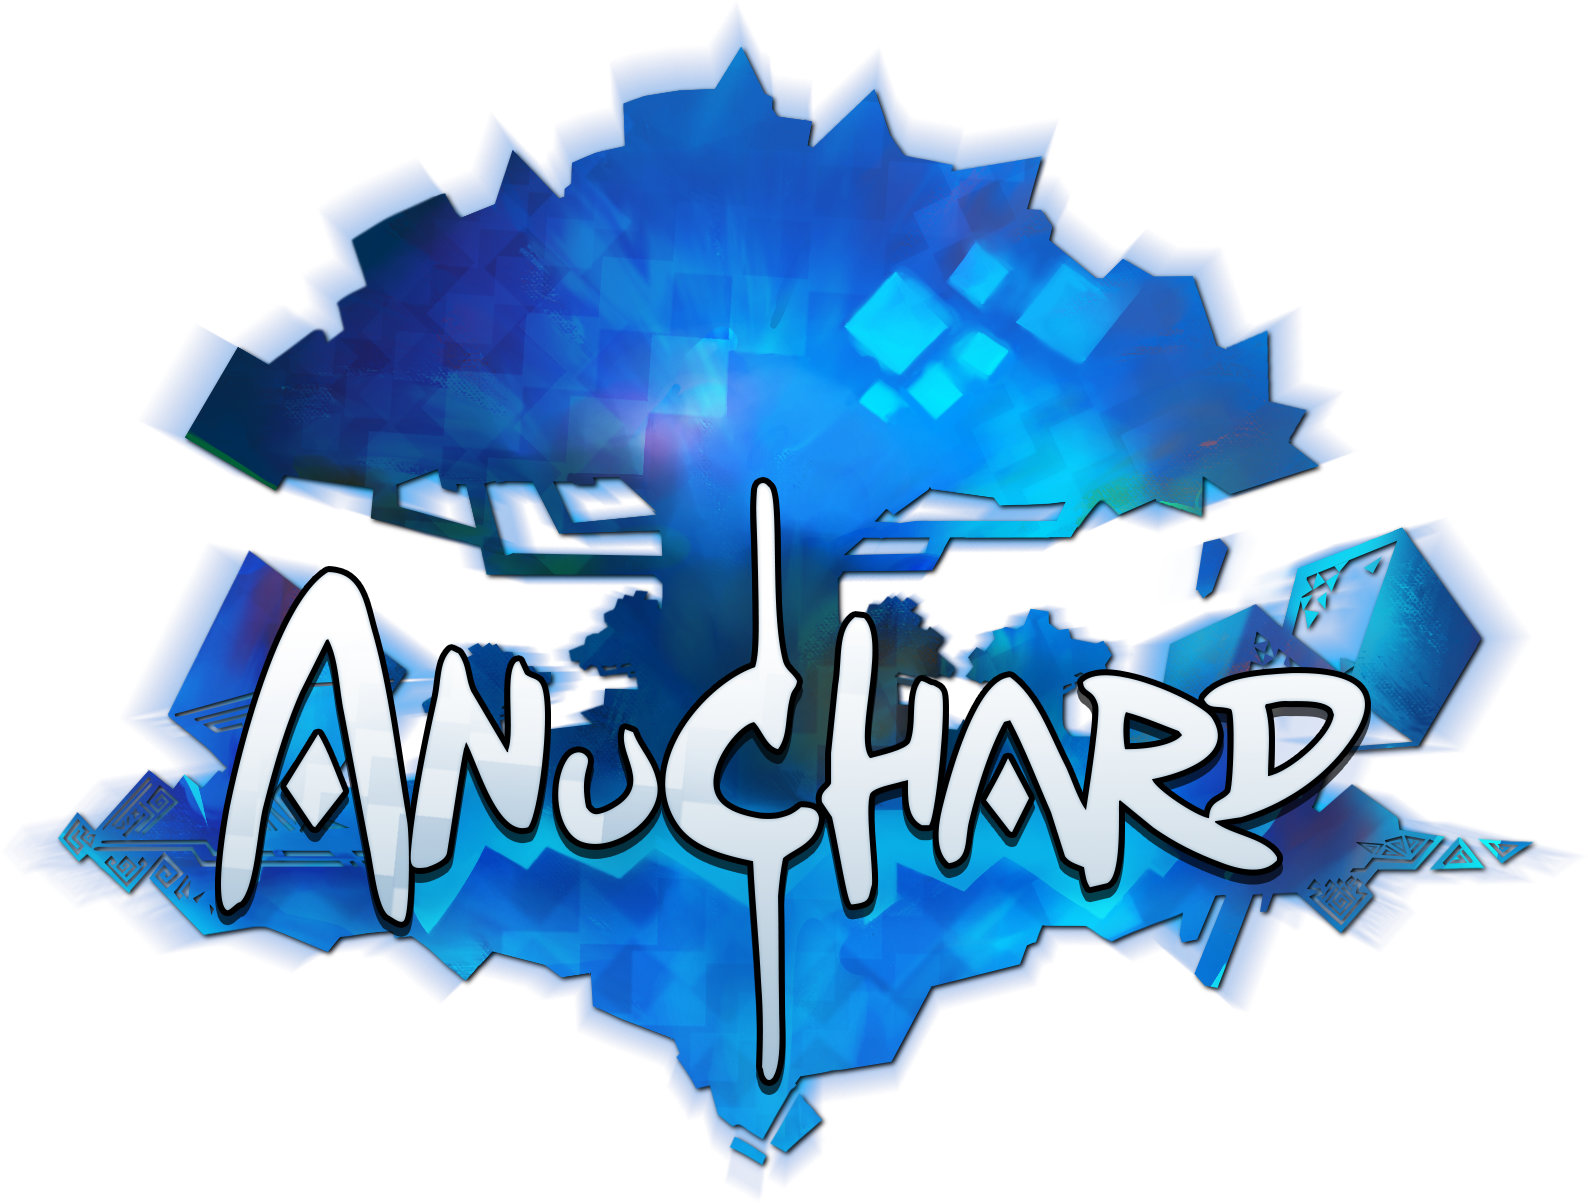 Anuchard Logo Full